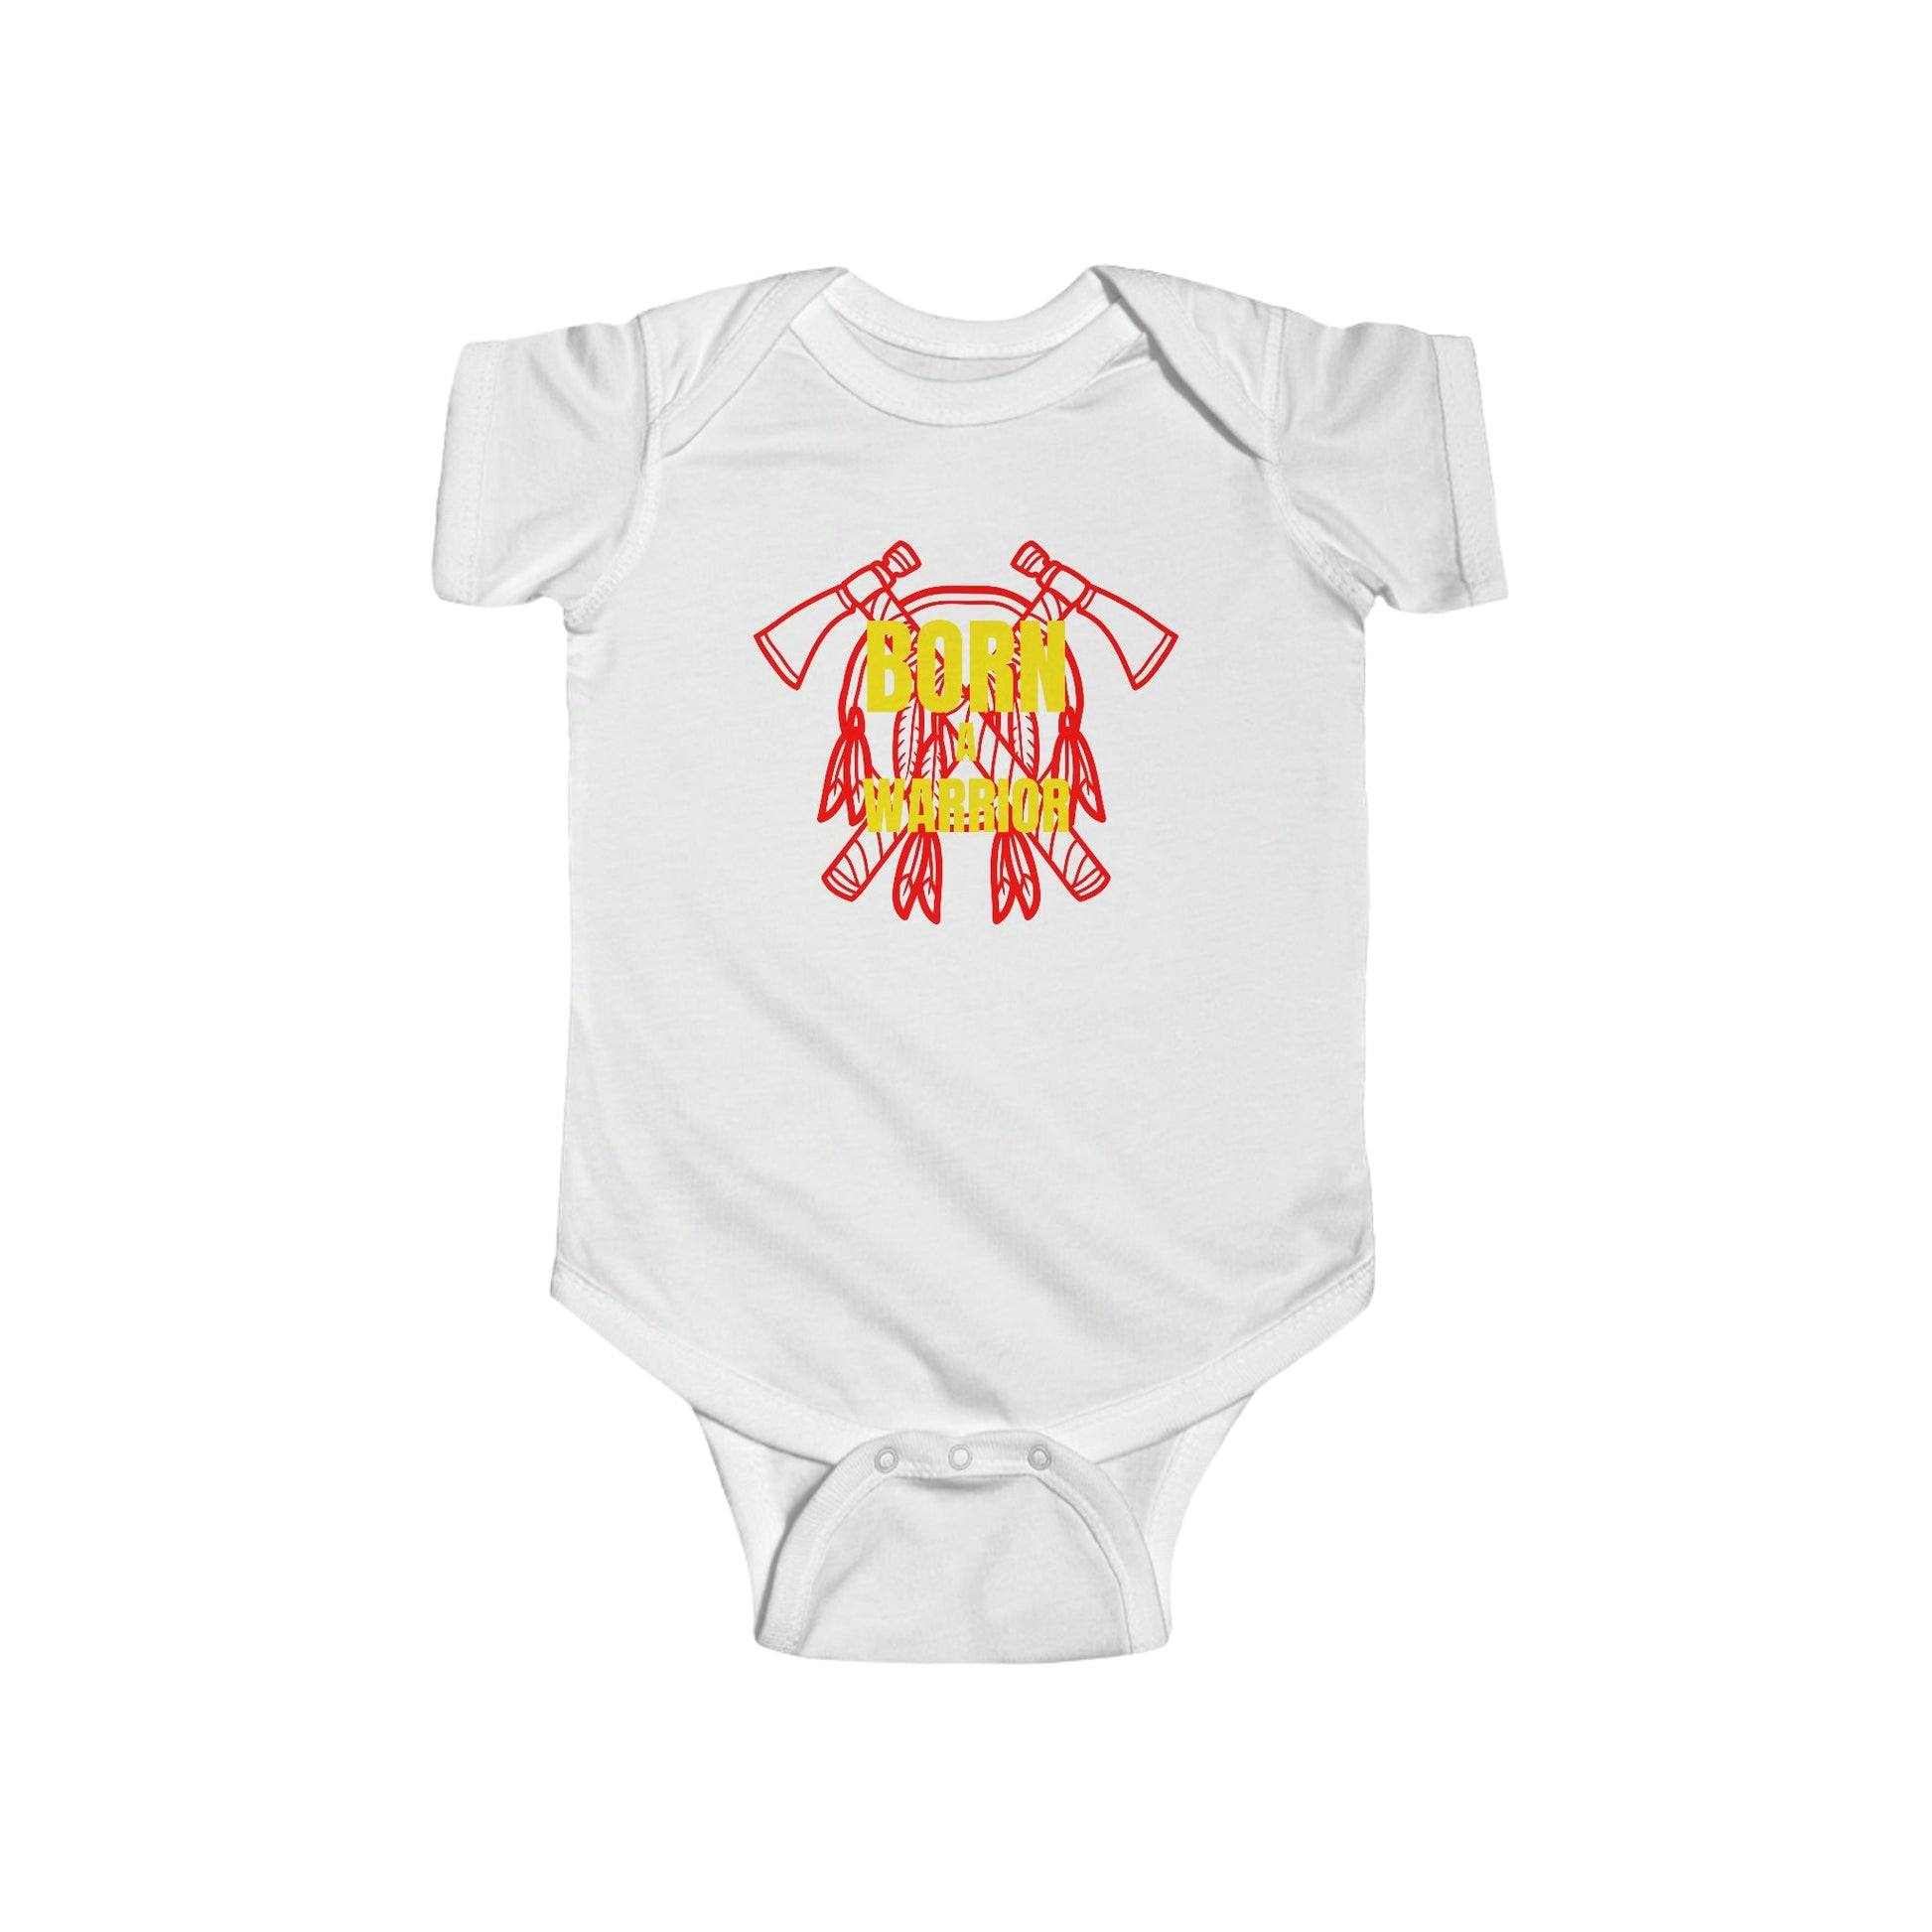 Born a Warrior Infant Fine Jersey Bodysuit - Nikikw Designs